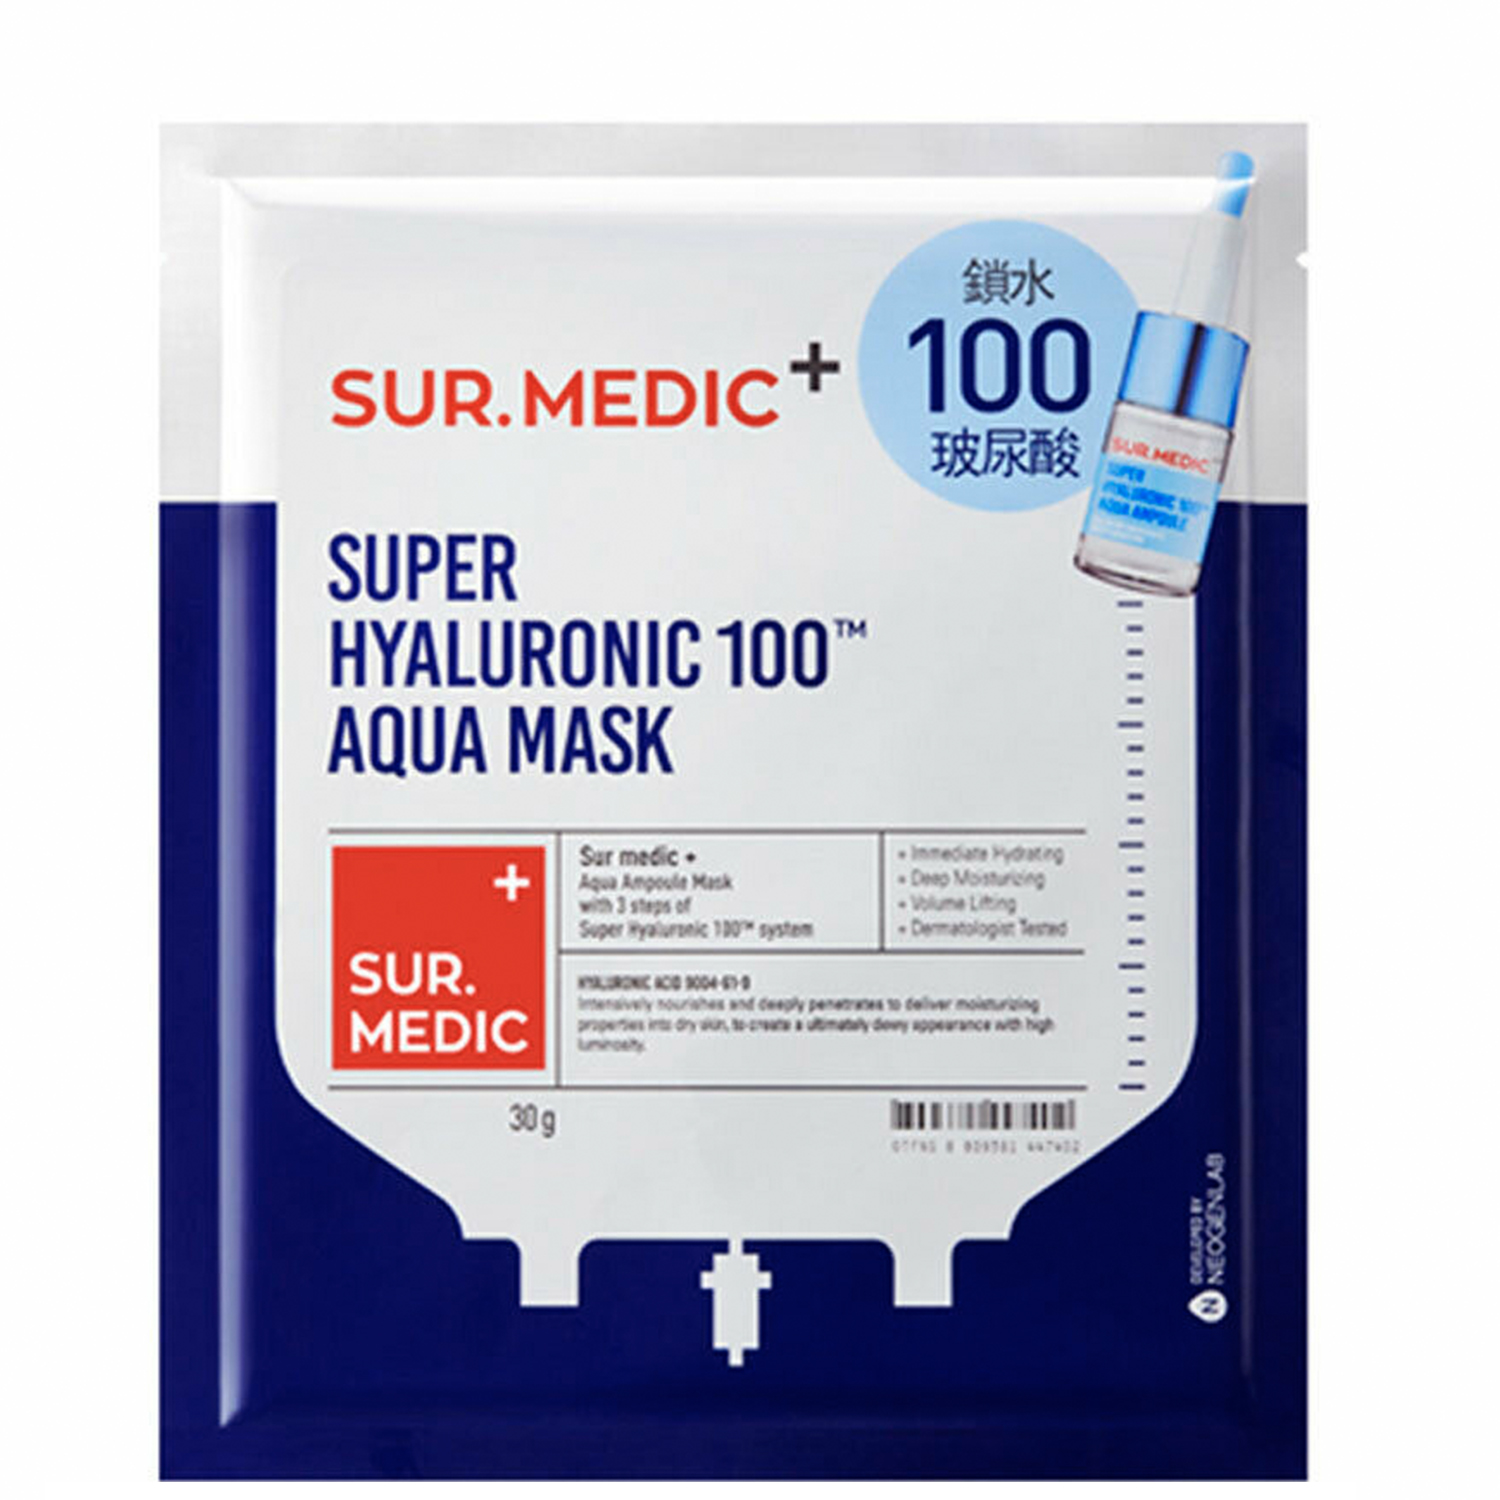 Neogen SUR.MEDIC+ SUPER HYALURONIC 100TM Aqua Mask Ультра-увлажняющая маска для лица, 30 г